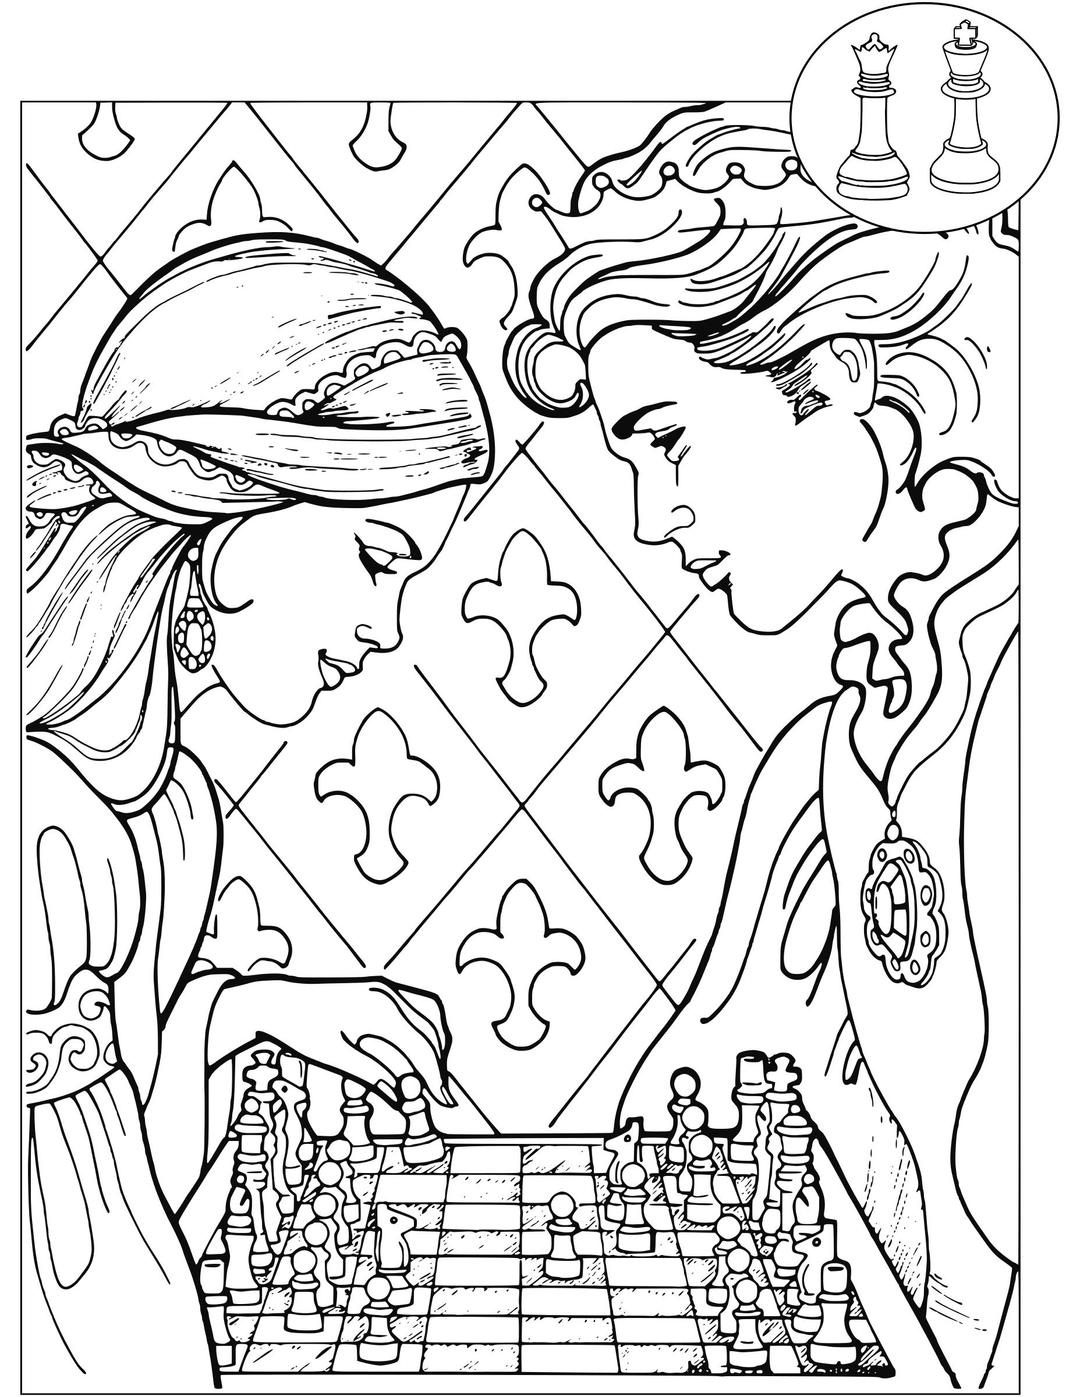 Chess coloring book  / Dibujo Ajedrez para colorear -25- png transparent